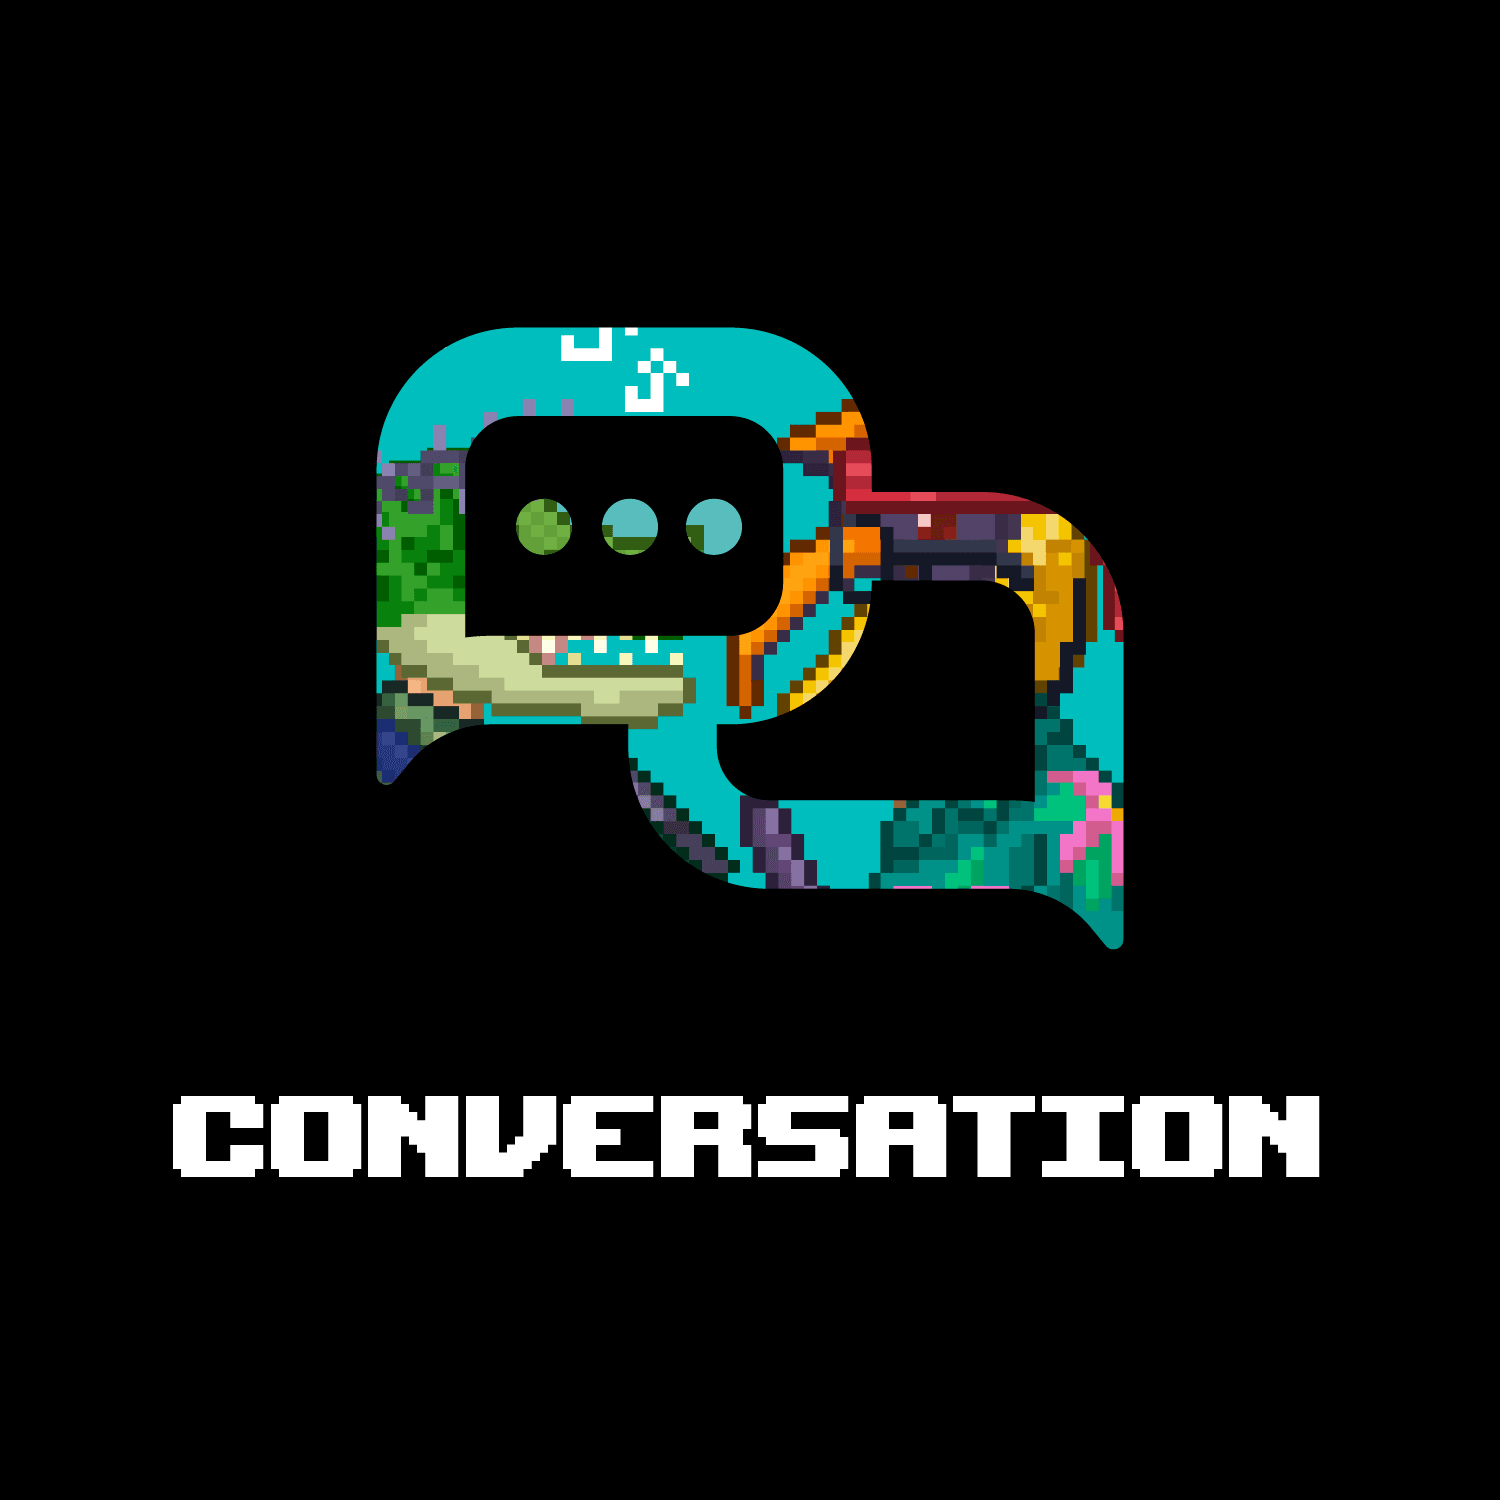 Conversation789